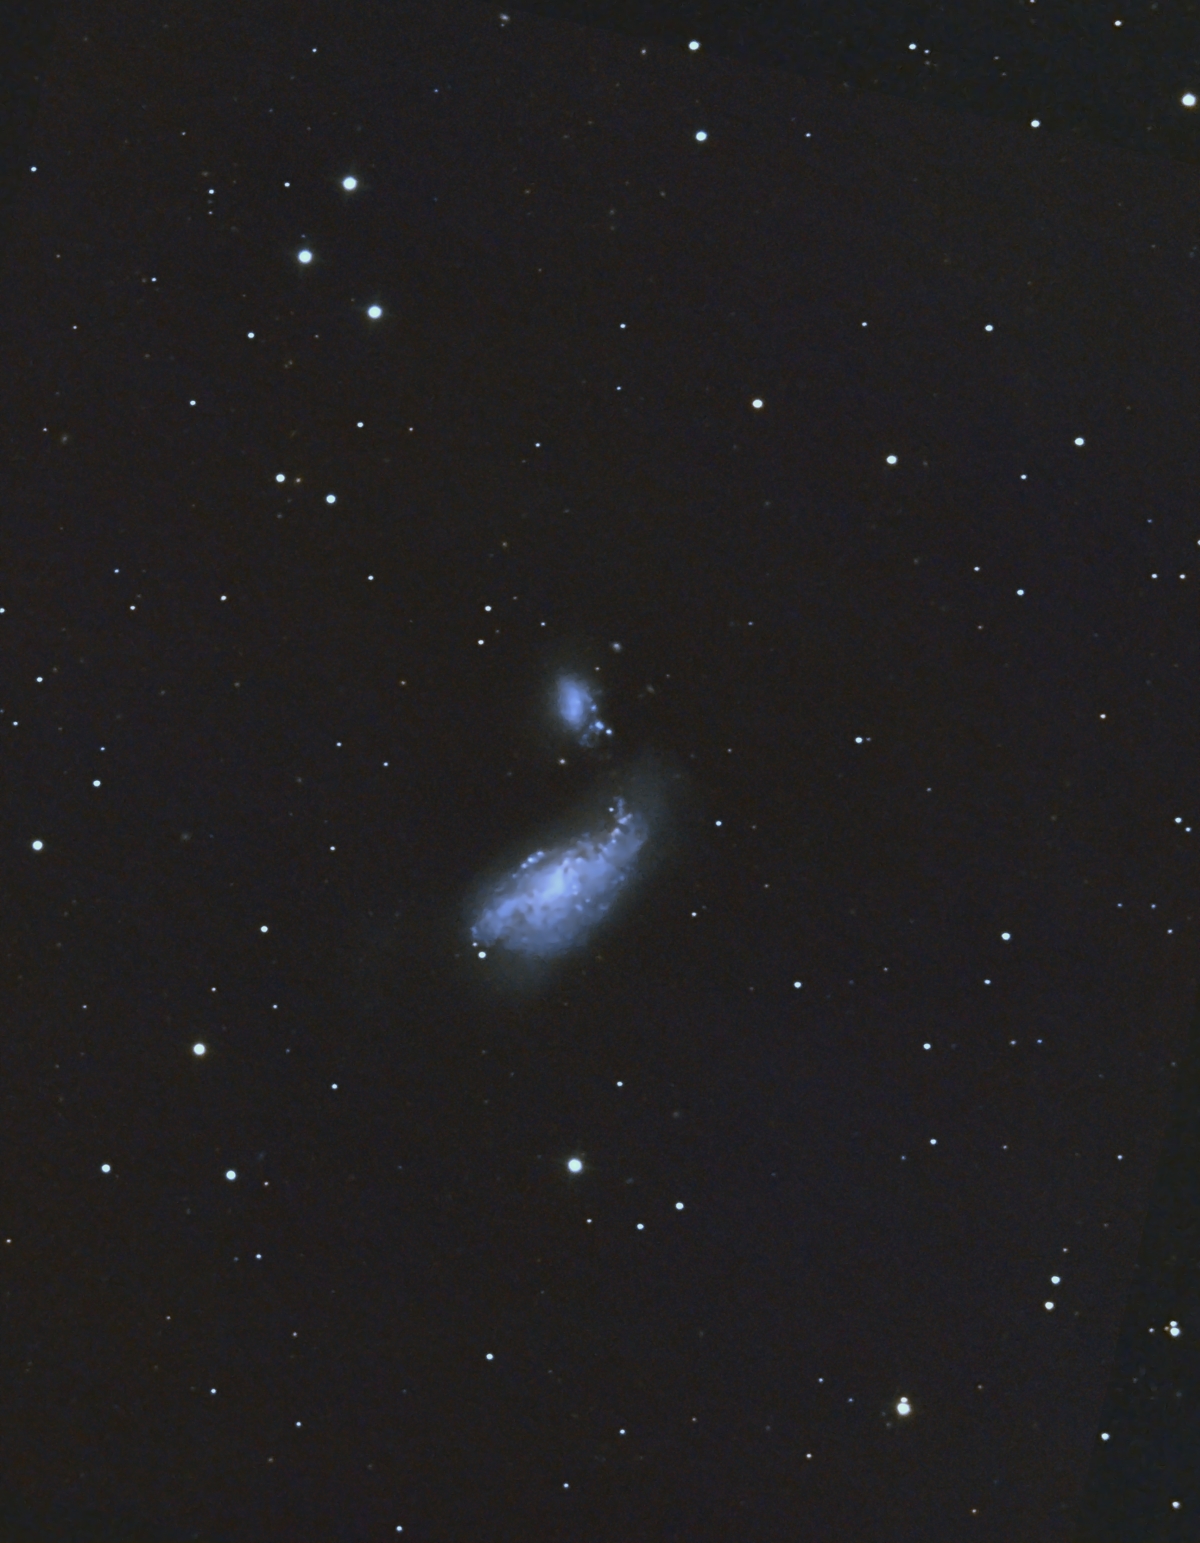 galaxies NGC 4490 4485 from April 20th, 2020; 200x32 sec; C9.25 at 1500mm, mod. Canon 77d; uv_ir filter;